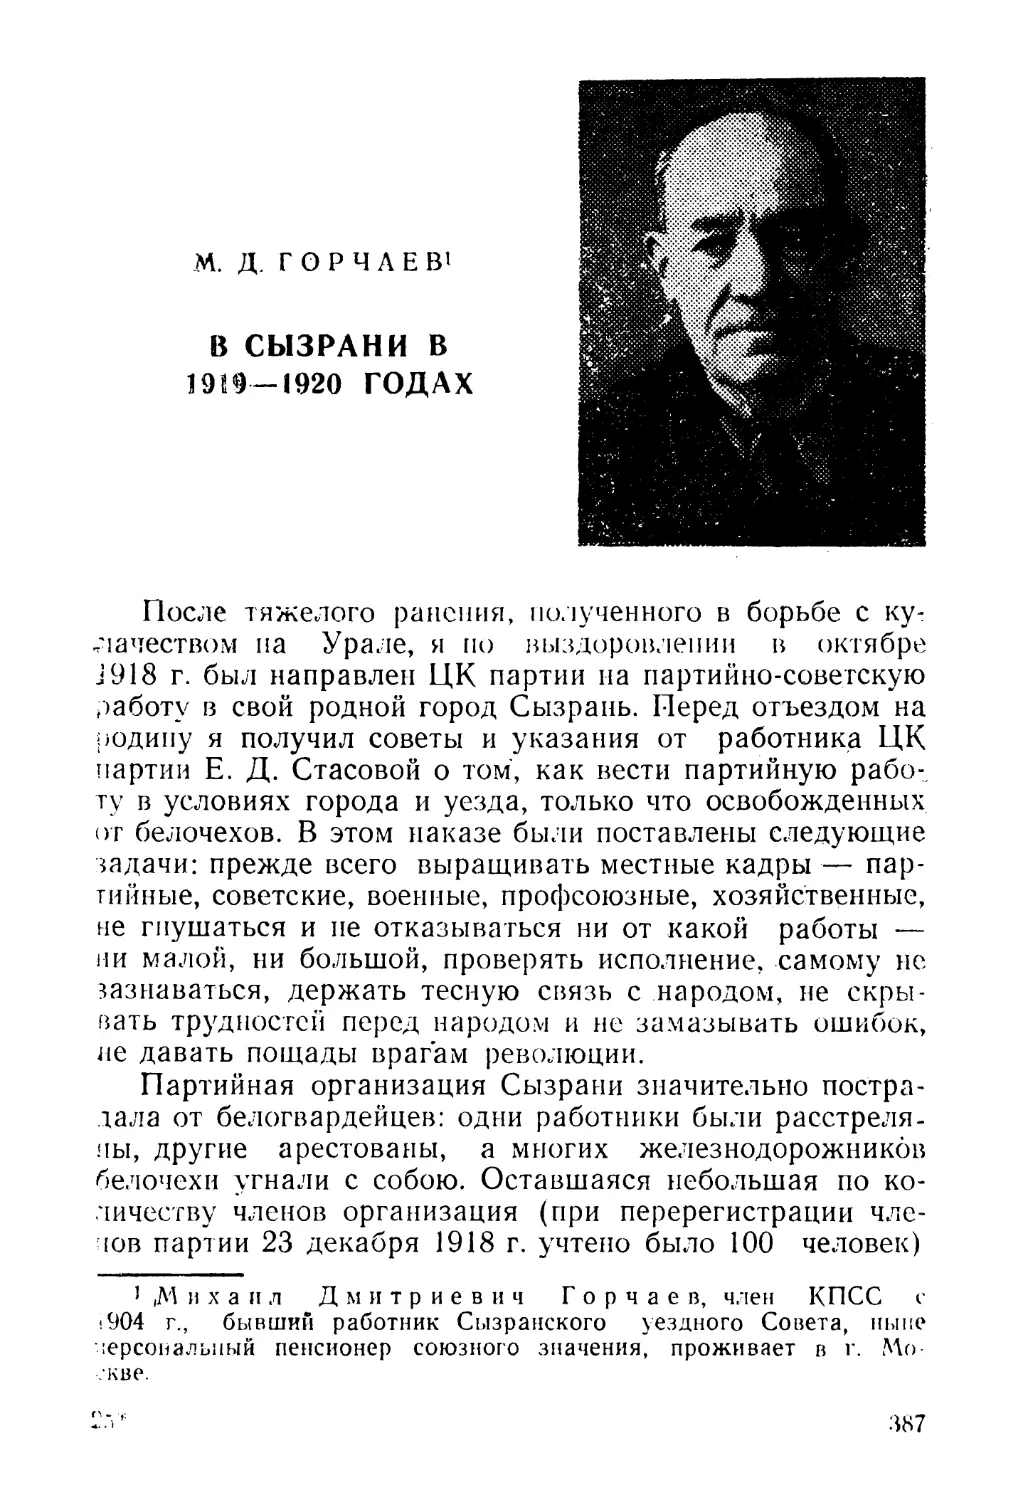 М. Д. Горчаев. В Сызрани в 1919—1920 гг.